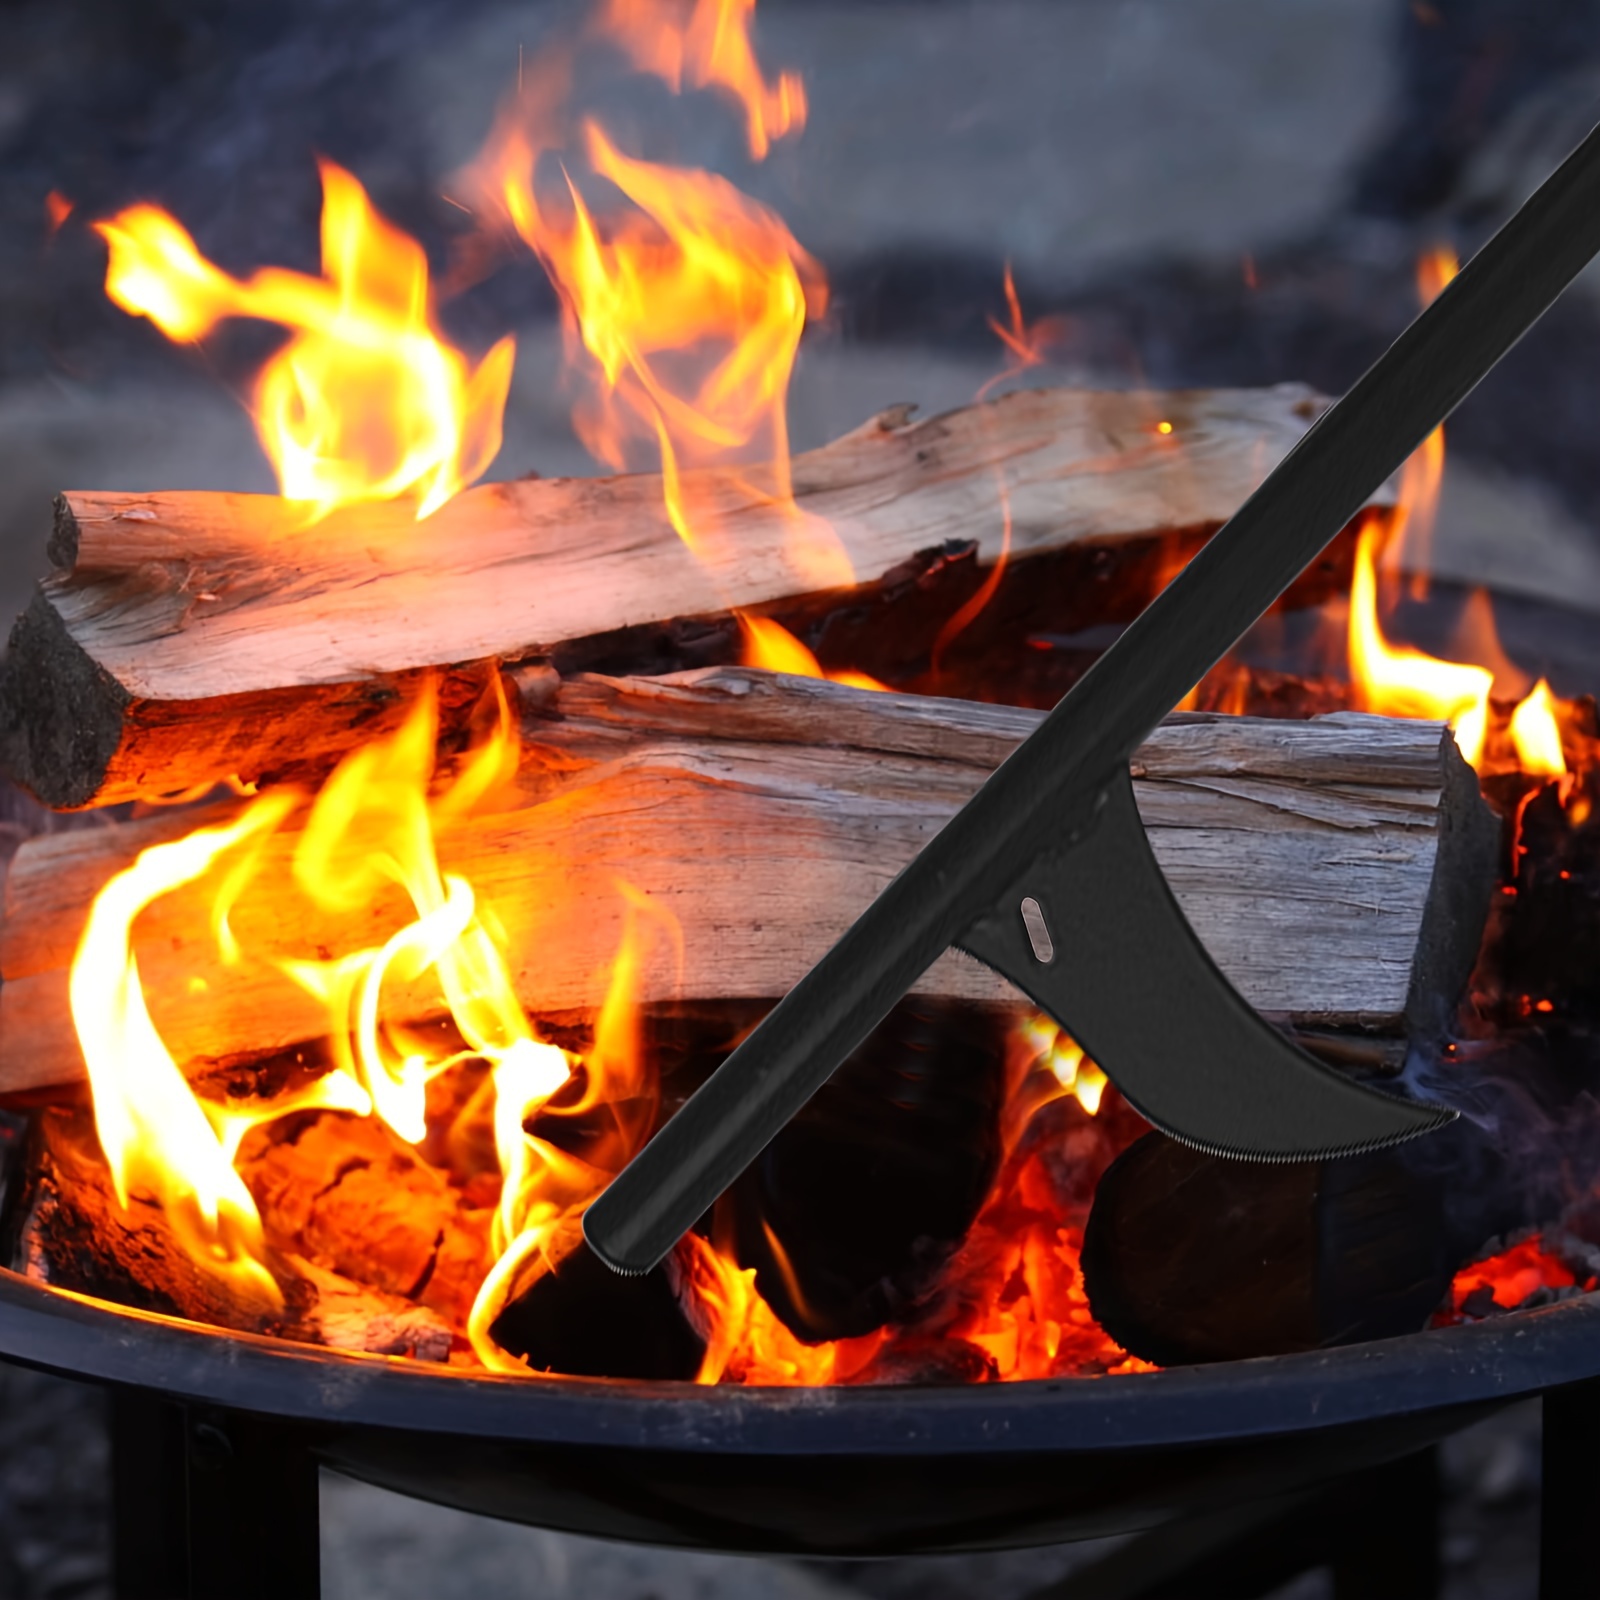 Poker Log Burning Stove Accessories Fire Iron Wood Burner Coal